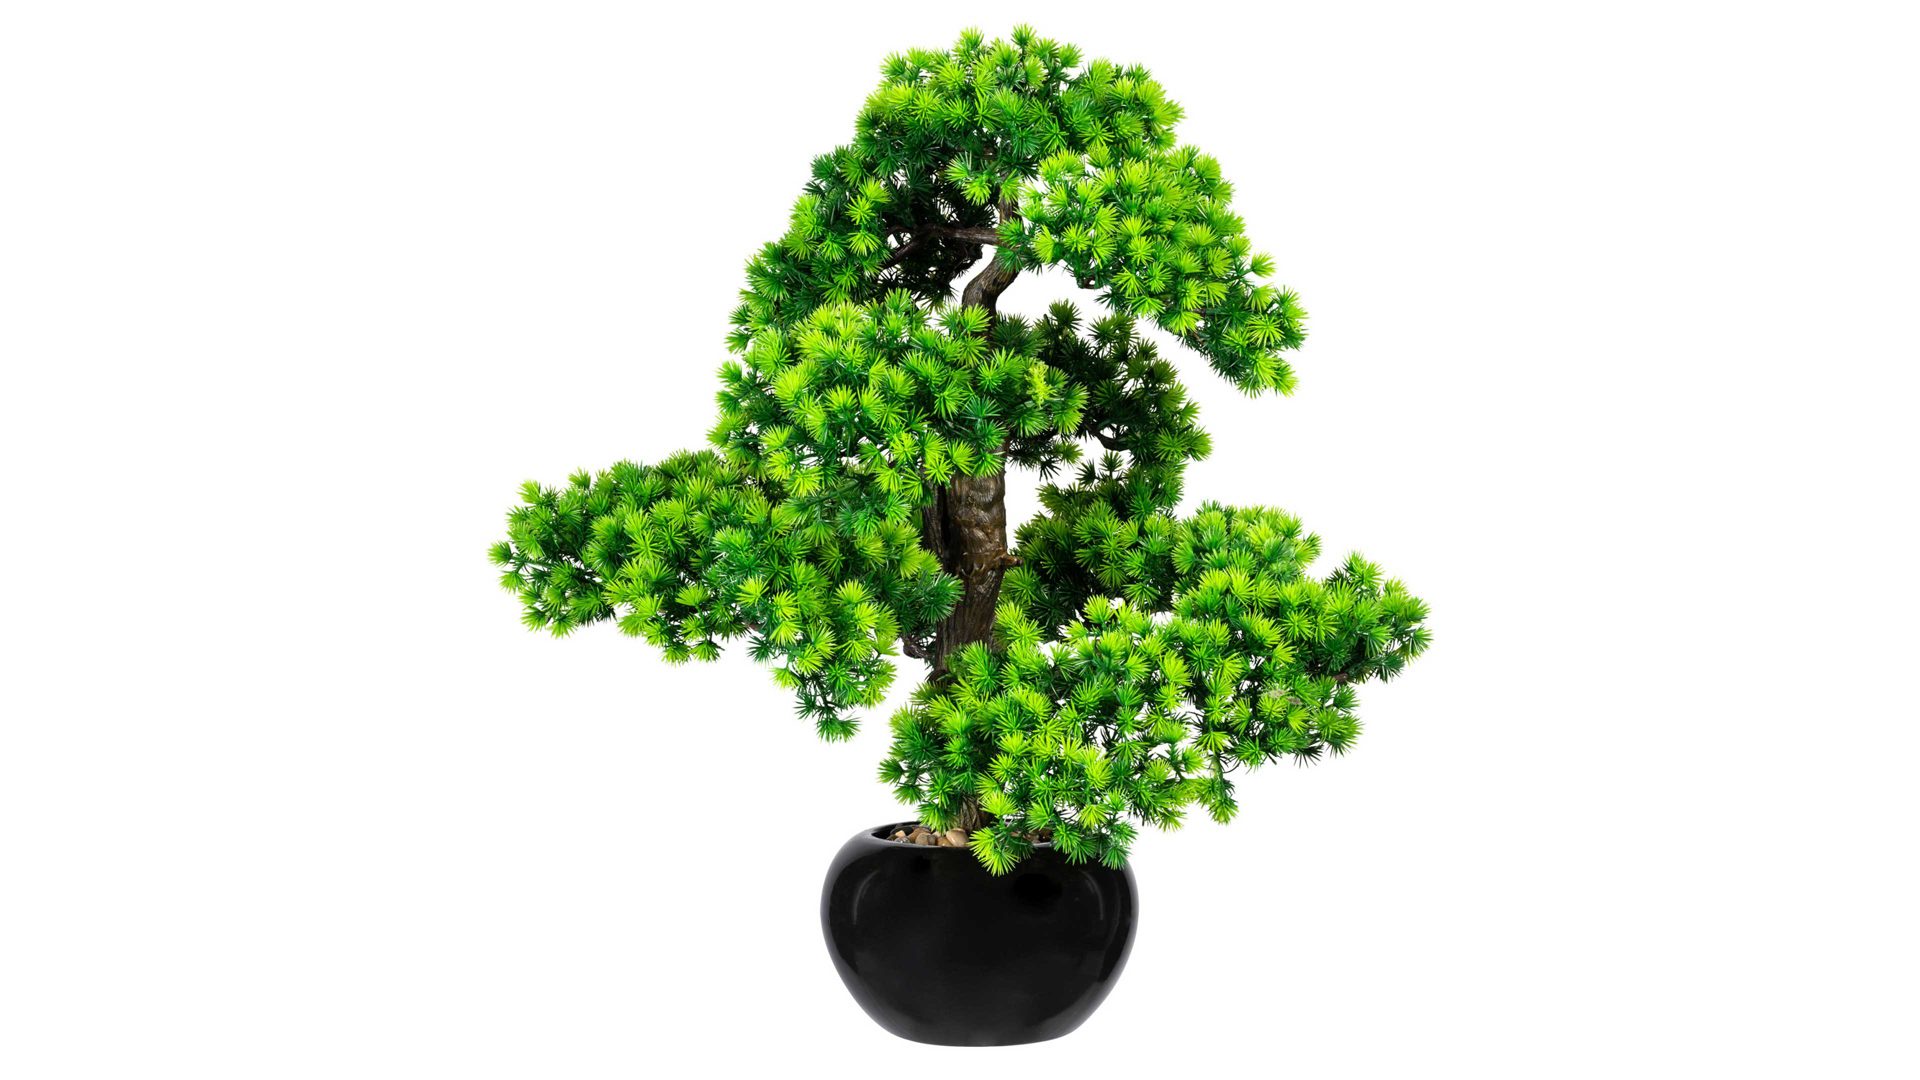 Pflanze Gasper aus Kunststoff in Grün Bonsai Lärche grüner Kunststoff & schwarzer Keramiktopf – Höhe ca. 60 cm